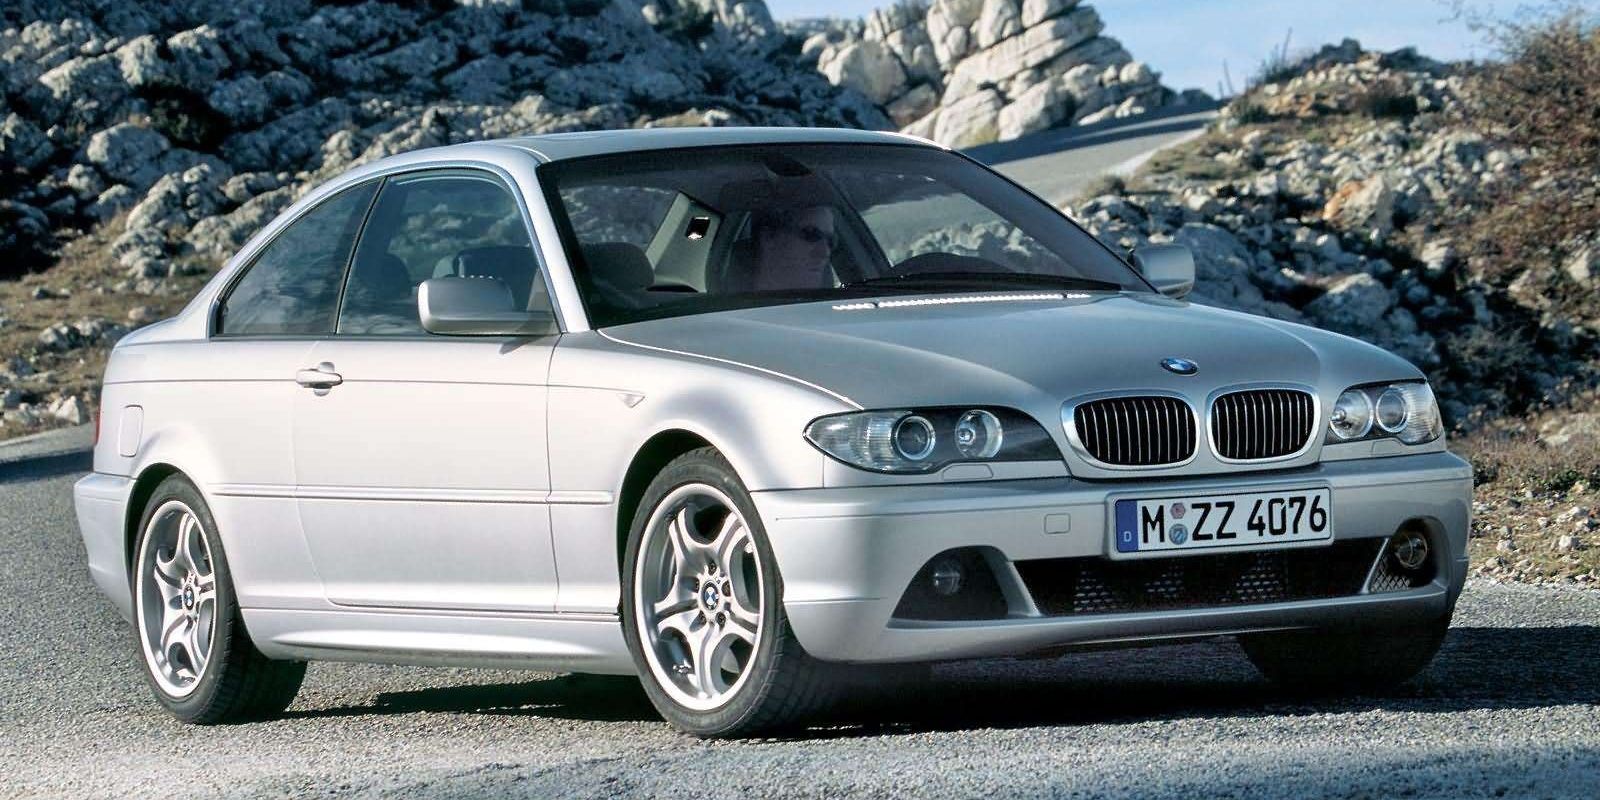 BMW 330Cd 2004